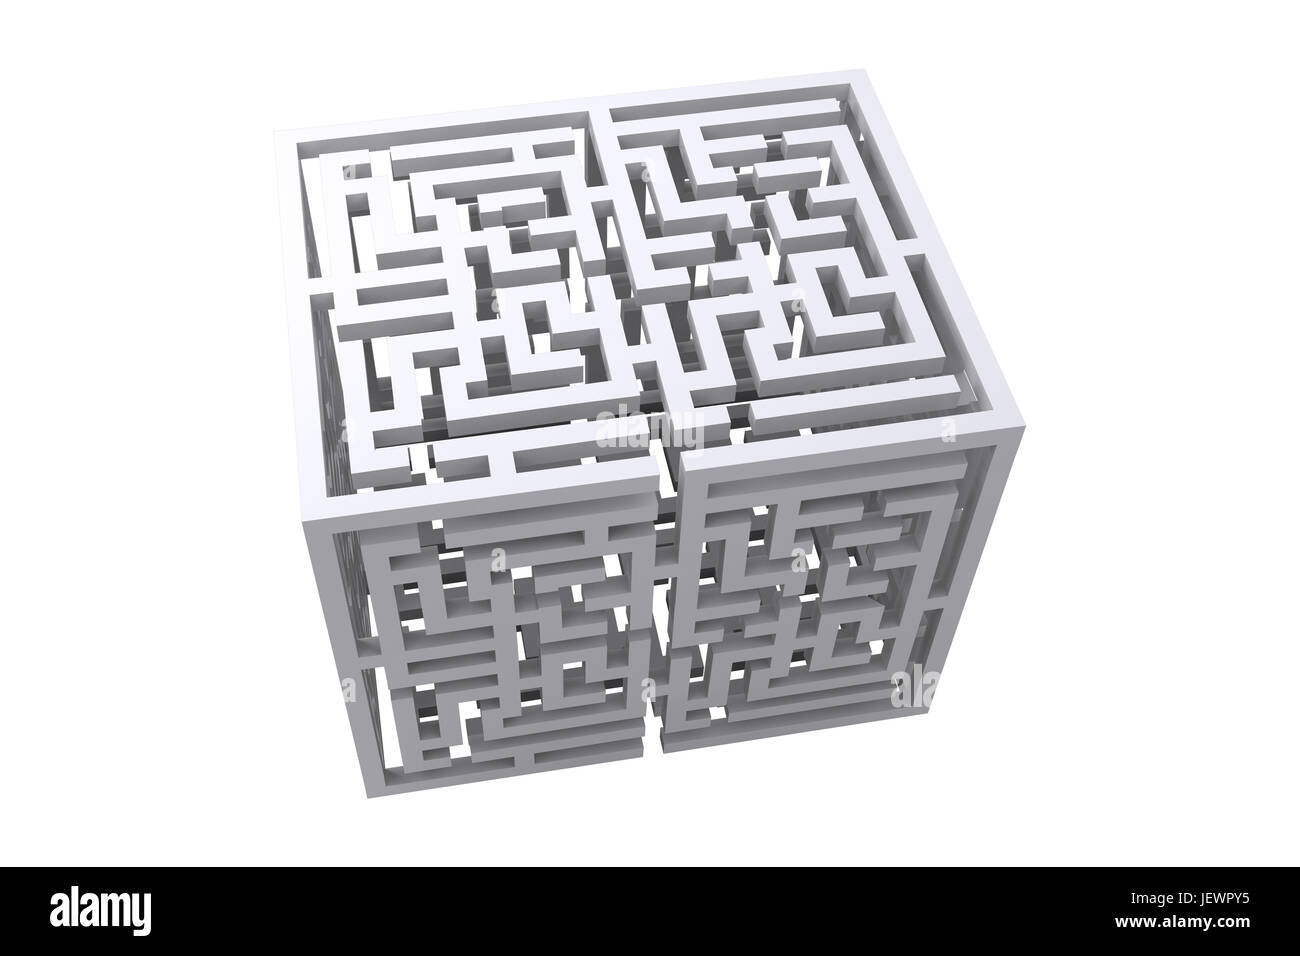 File:Fractal Design Menger labyrinthe 3D.jpg - Wikimedia Commons